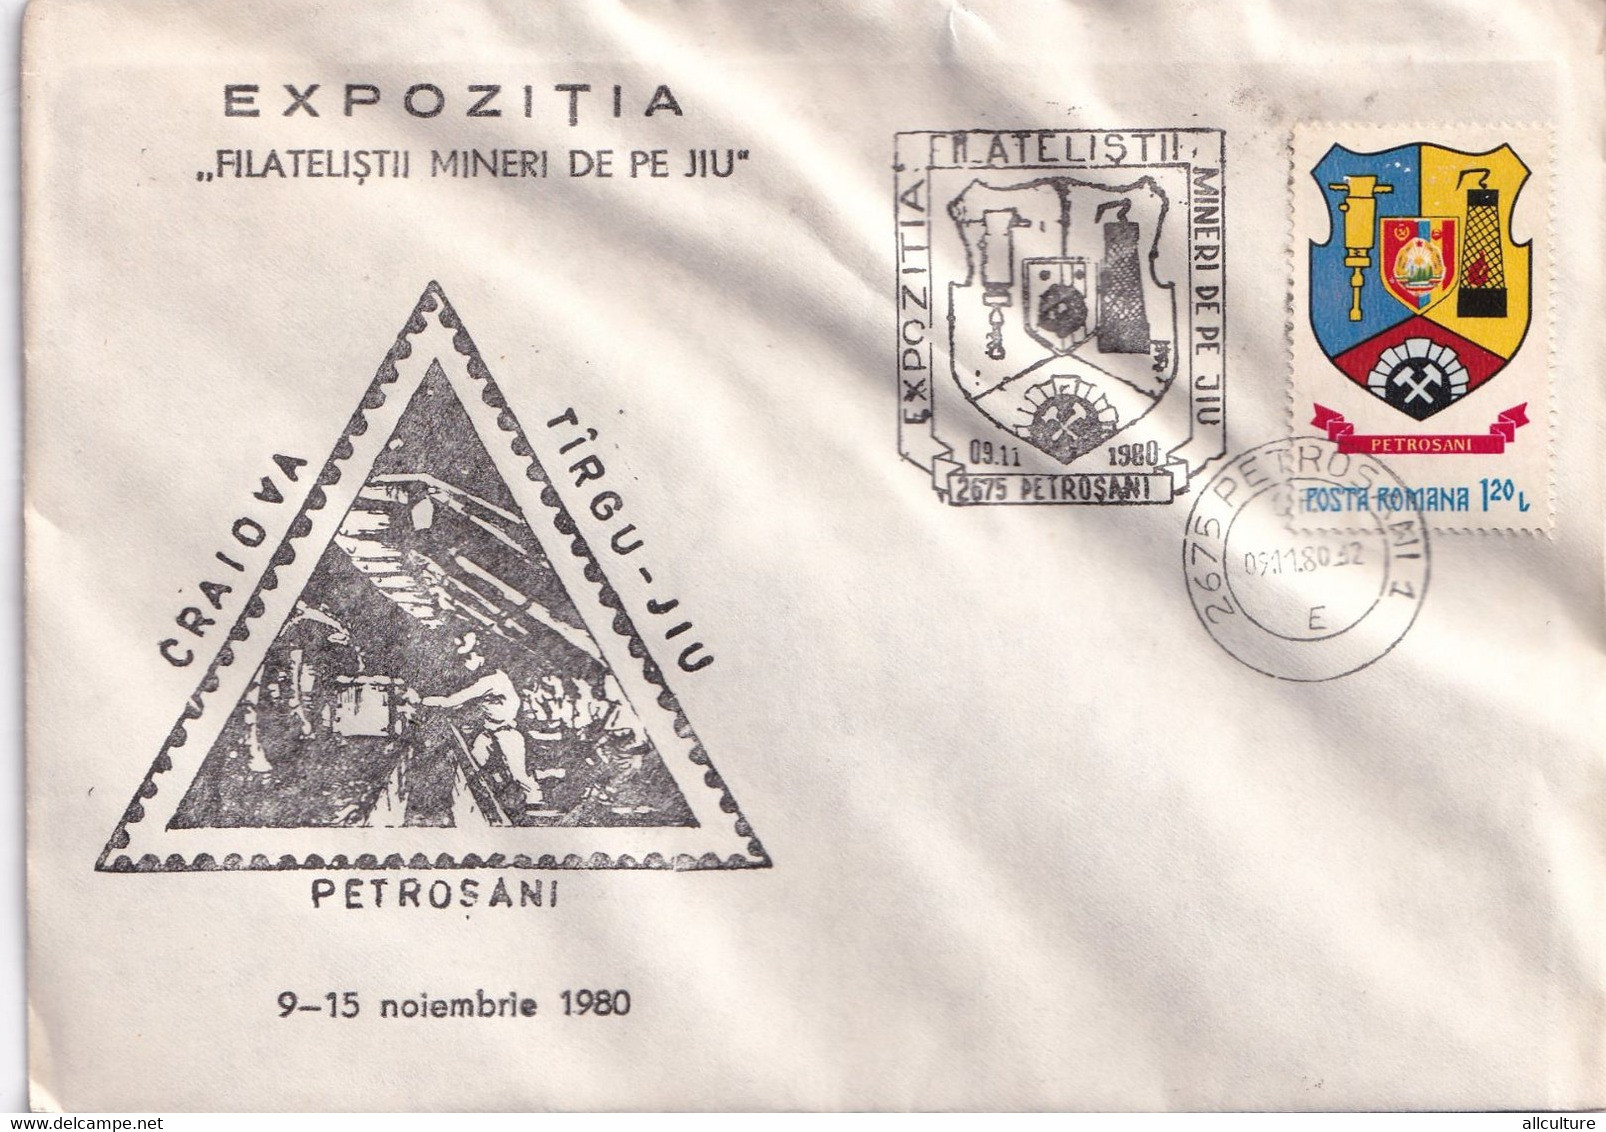 A2833 - Expozitia " Filatelistii Mineri De Pe Jiu" Targu Jiu, Craiova, Petrosani 1980 Romania - Briefe U. Dokumente